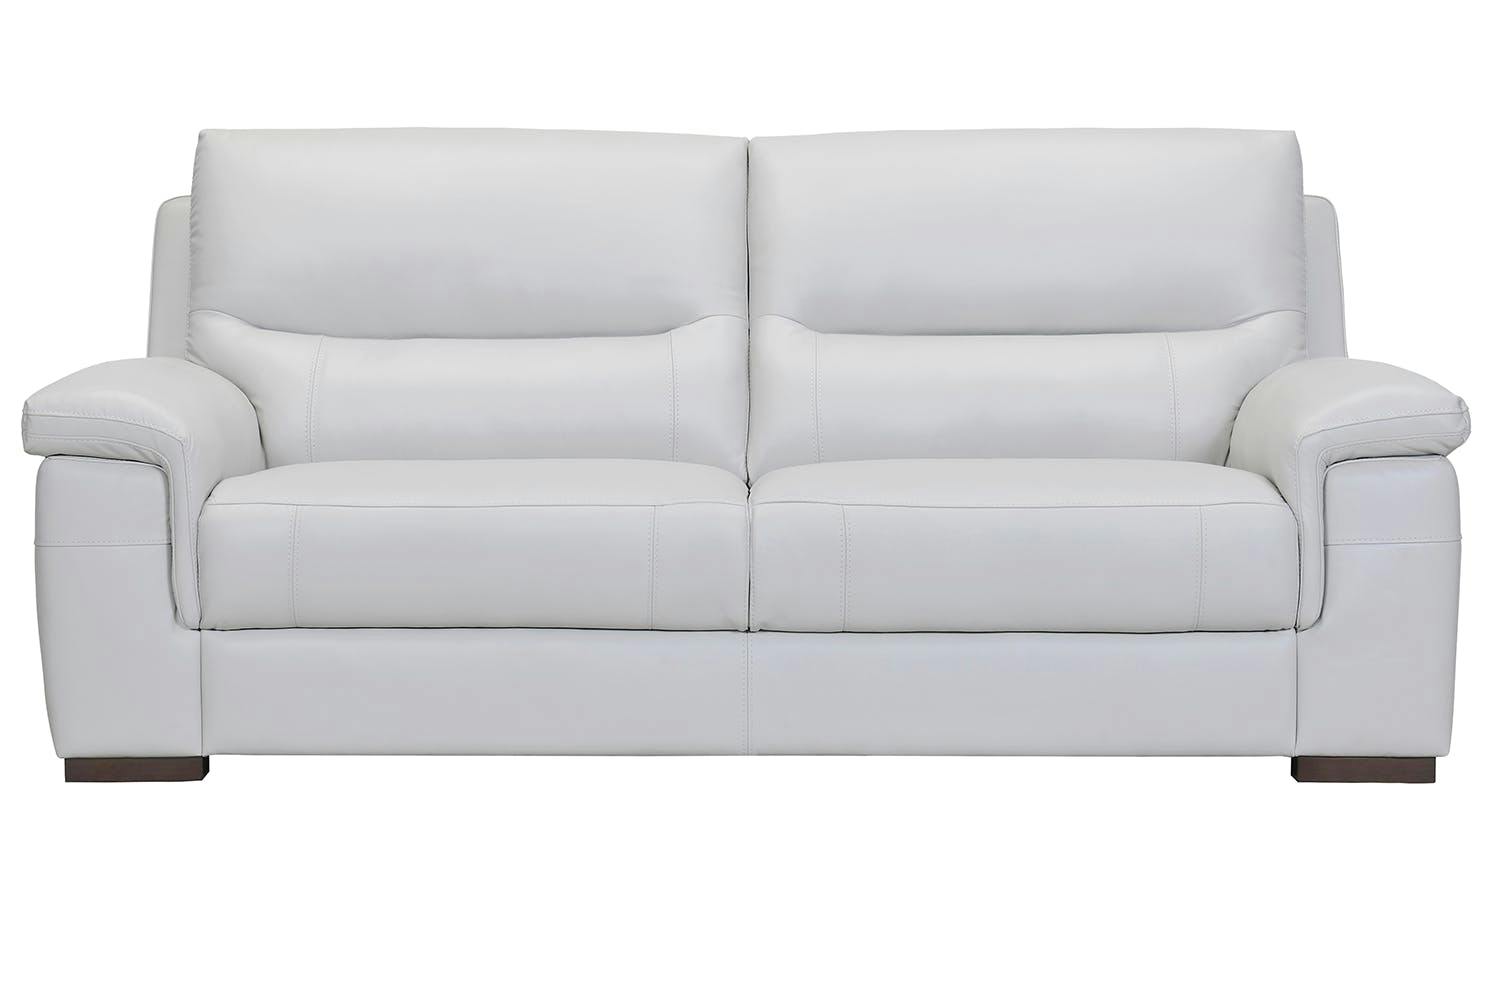 harvey norman leather sofa price